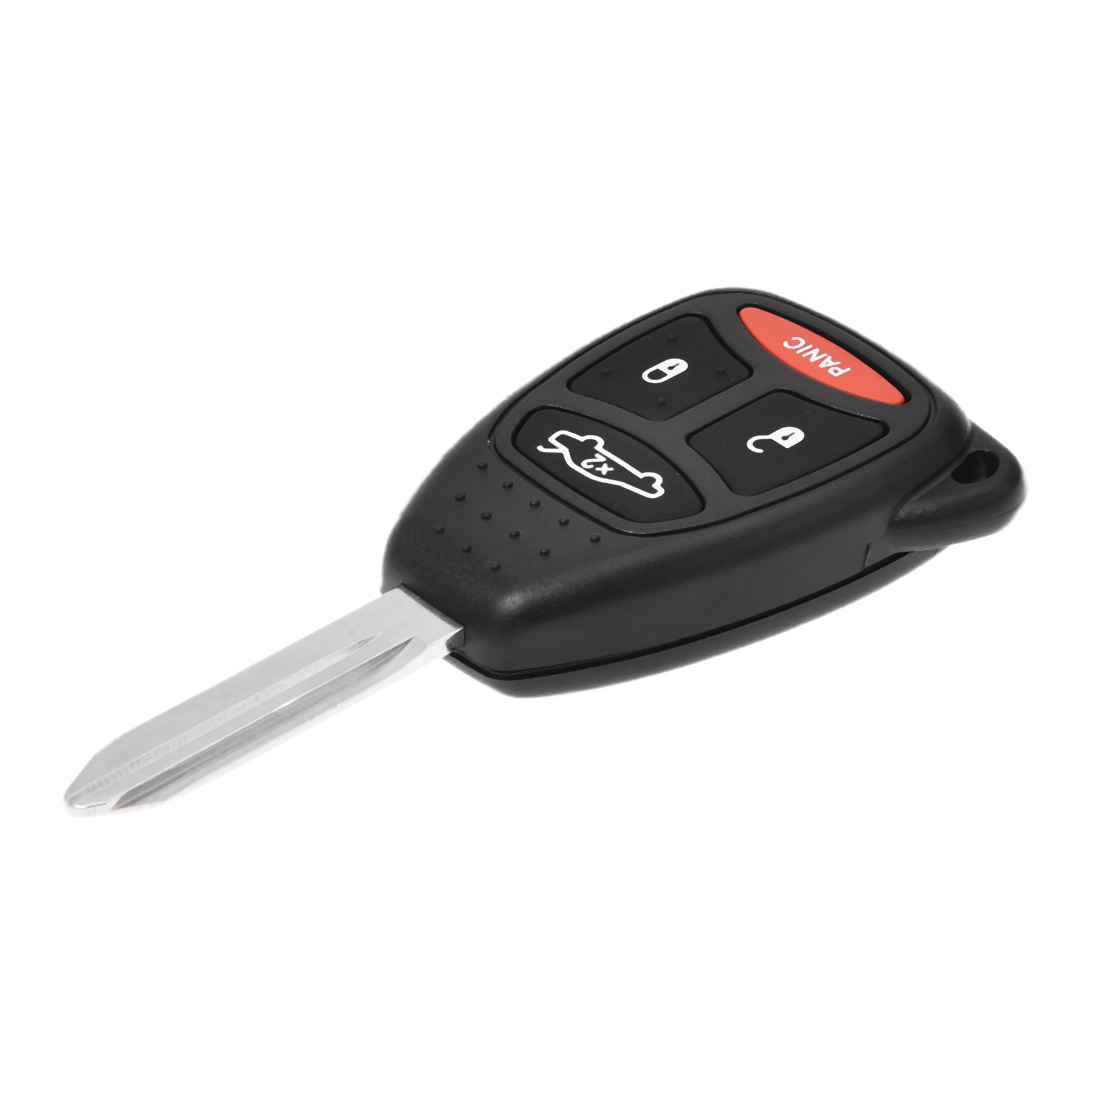 Chrysler Plymouth Service Keychain Key Fob 